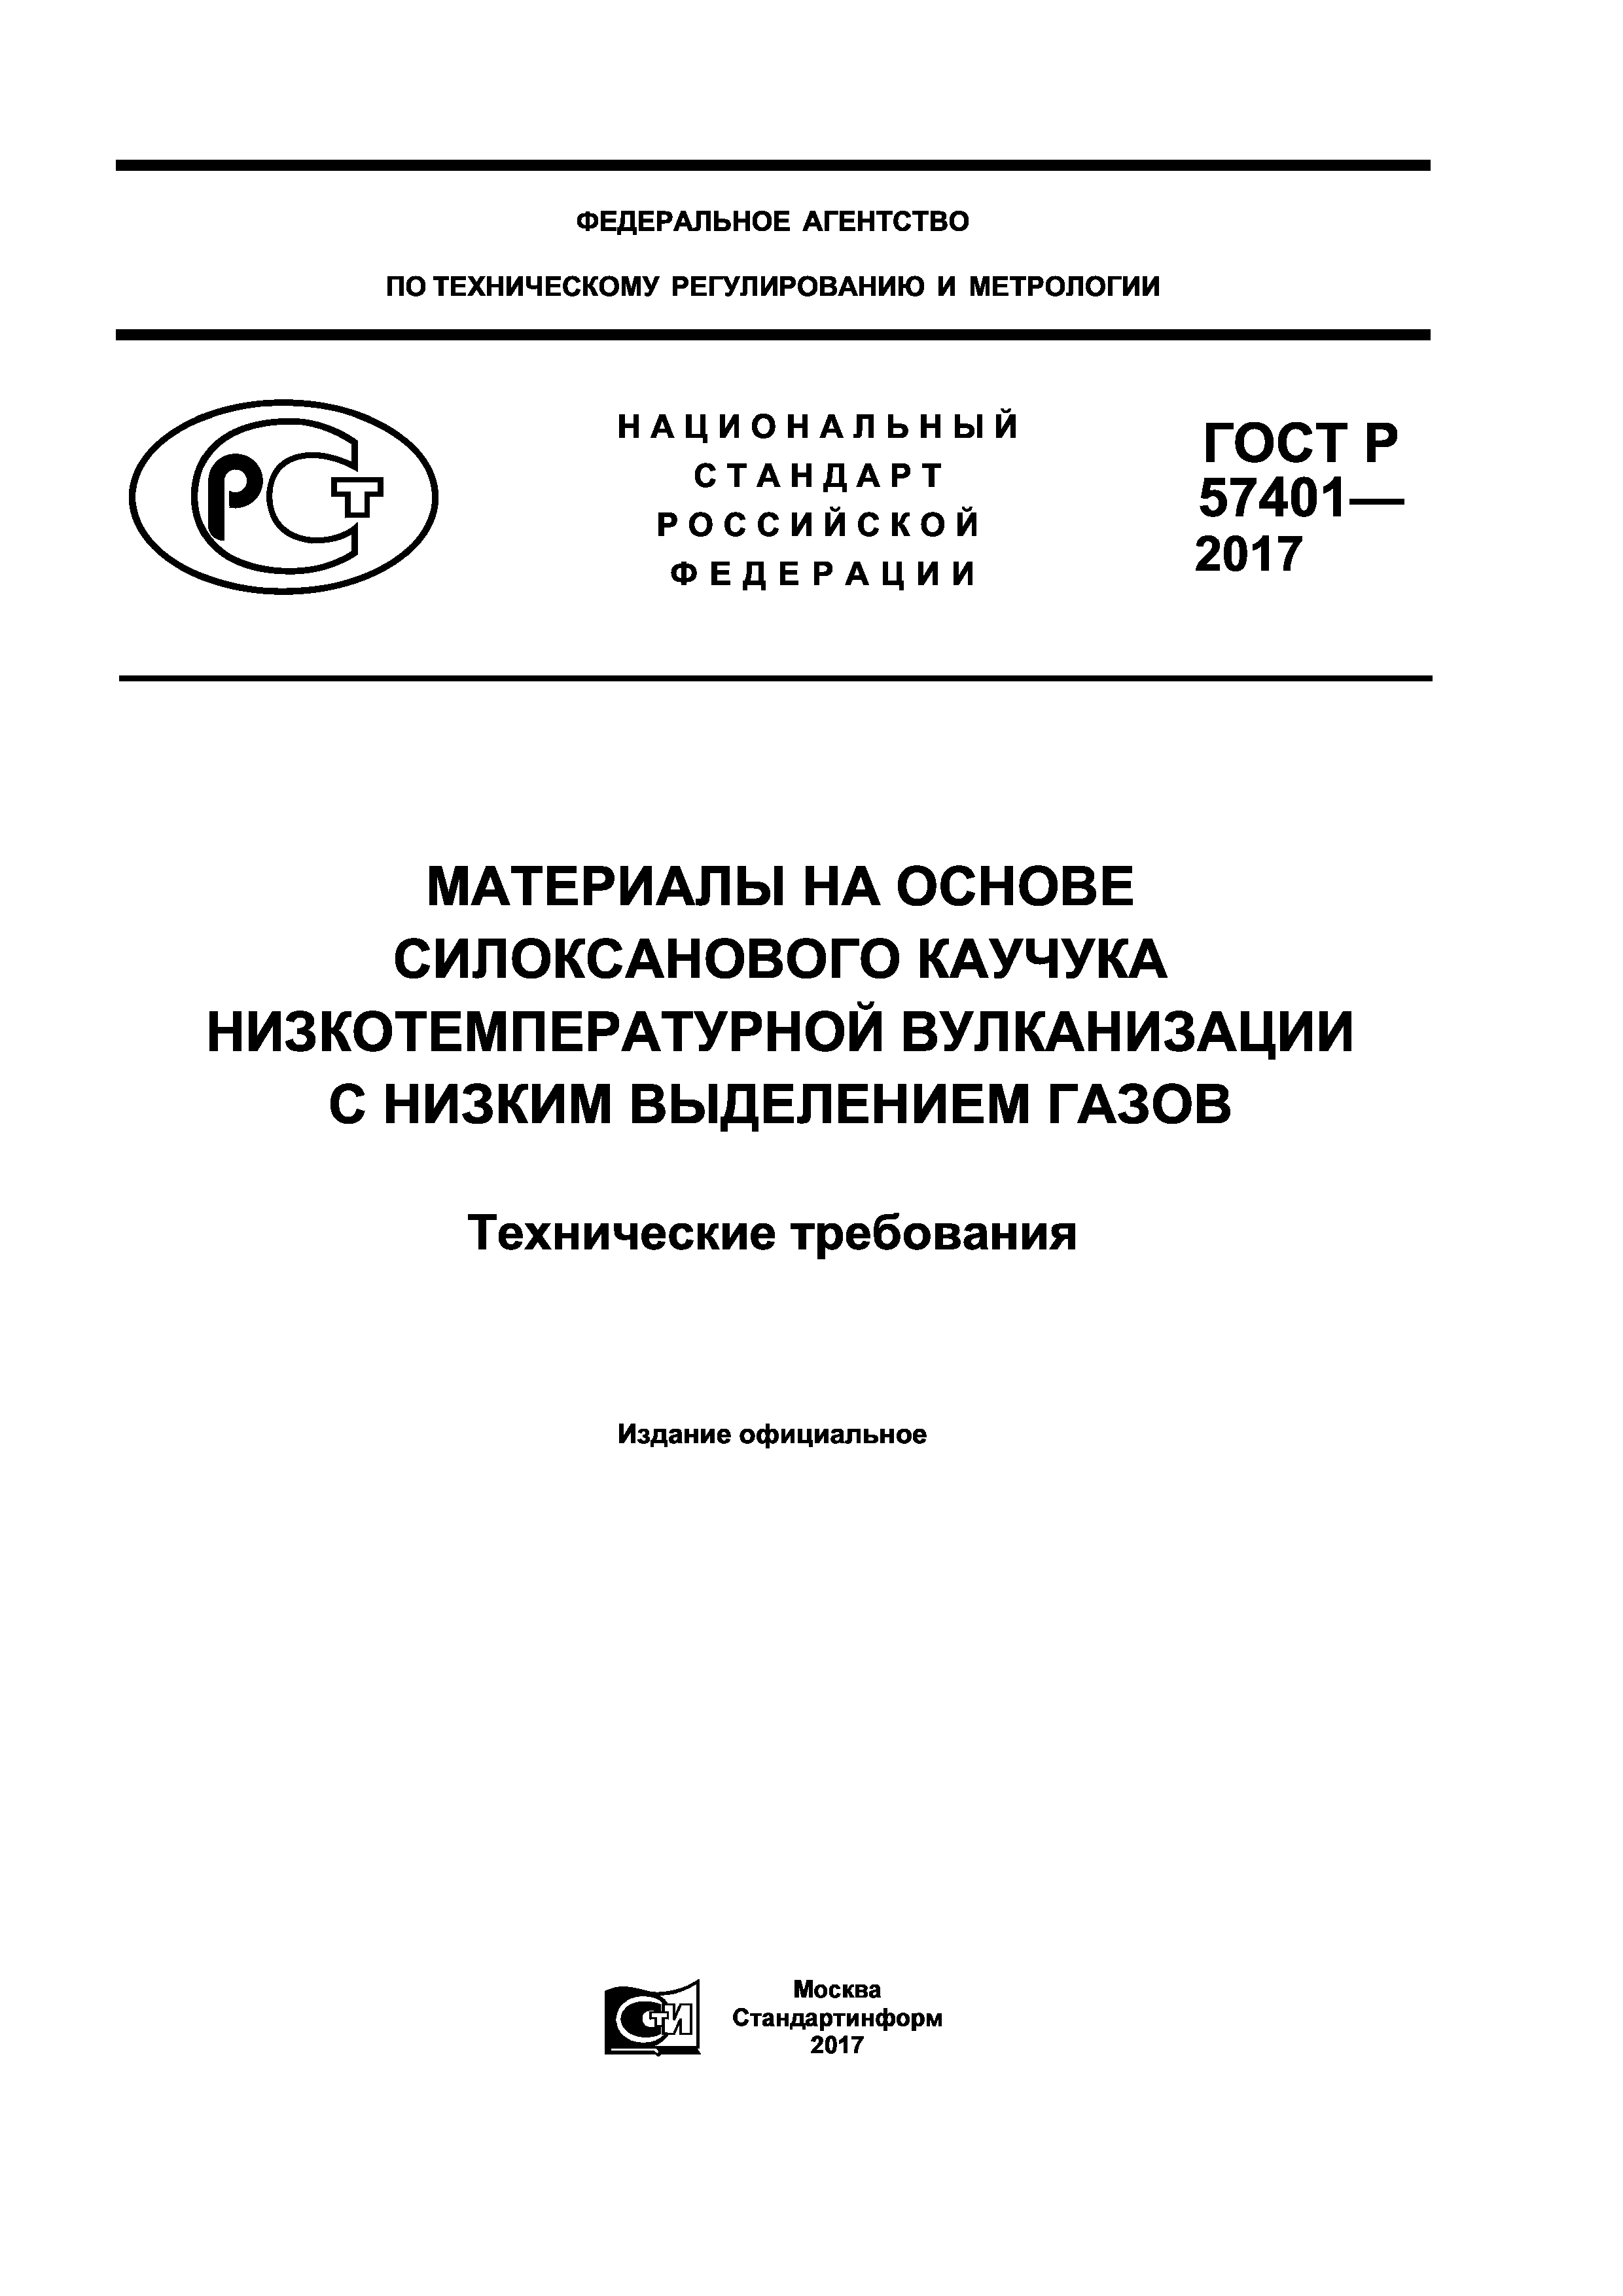 ГОСТ Р 57401-2017